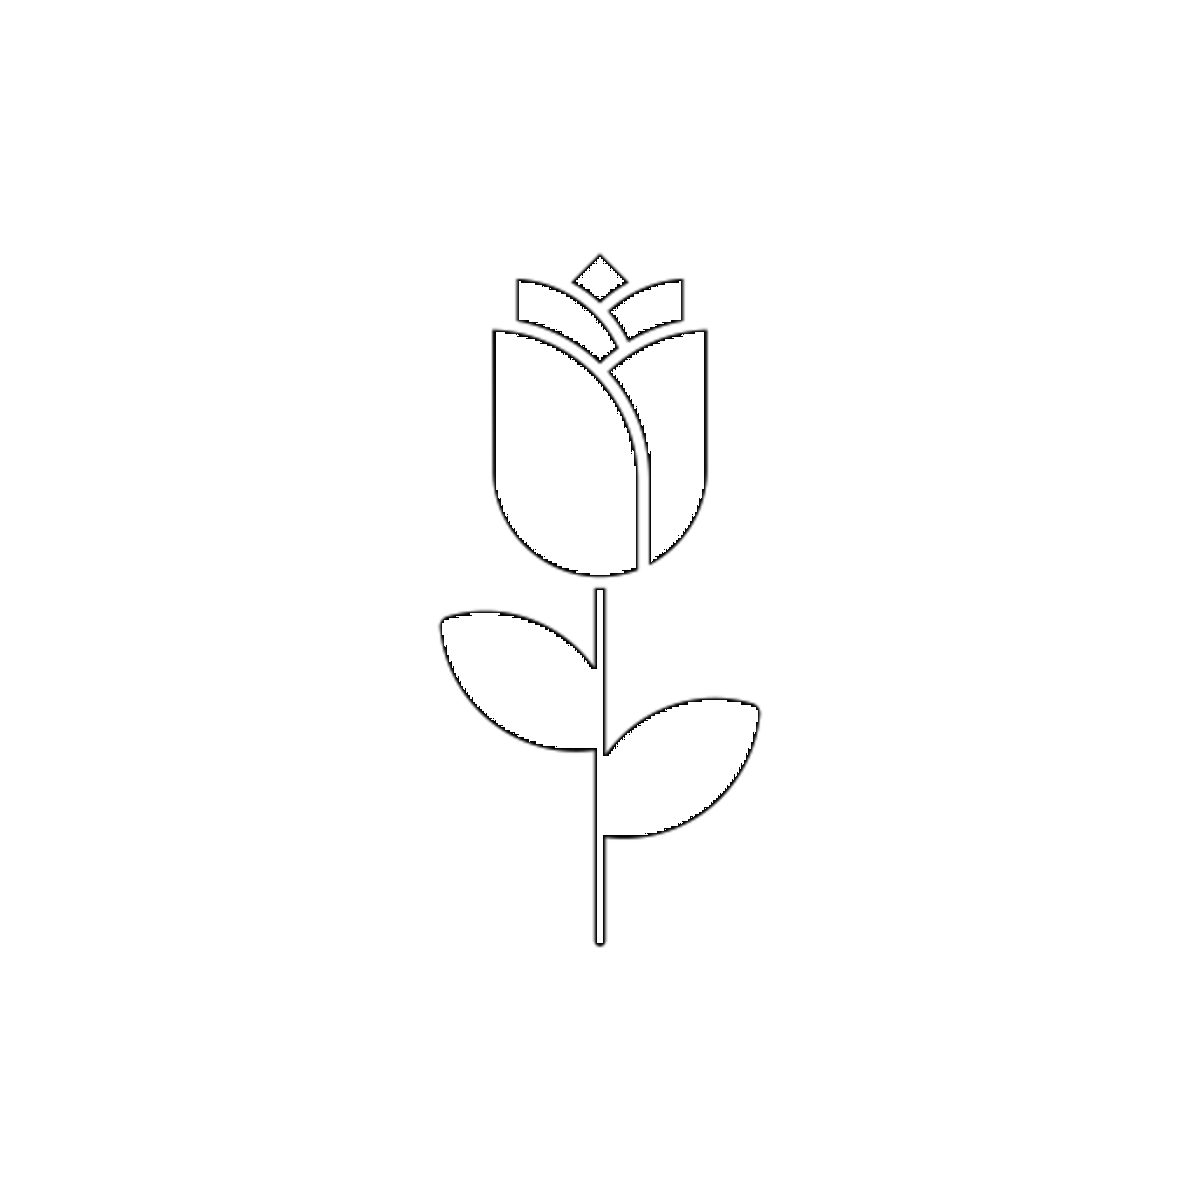 Symbol Roses